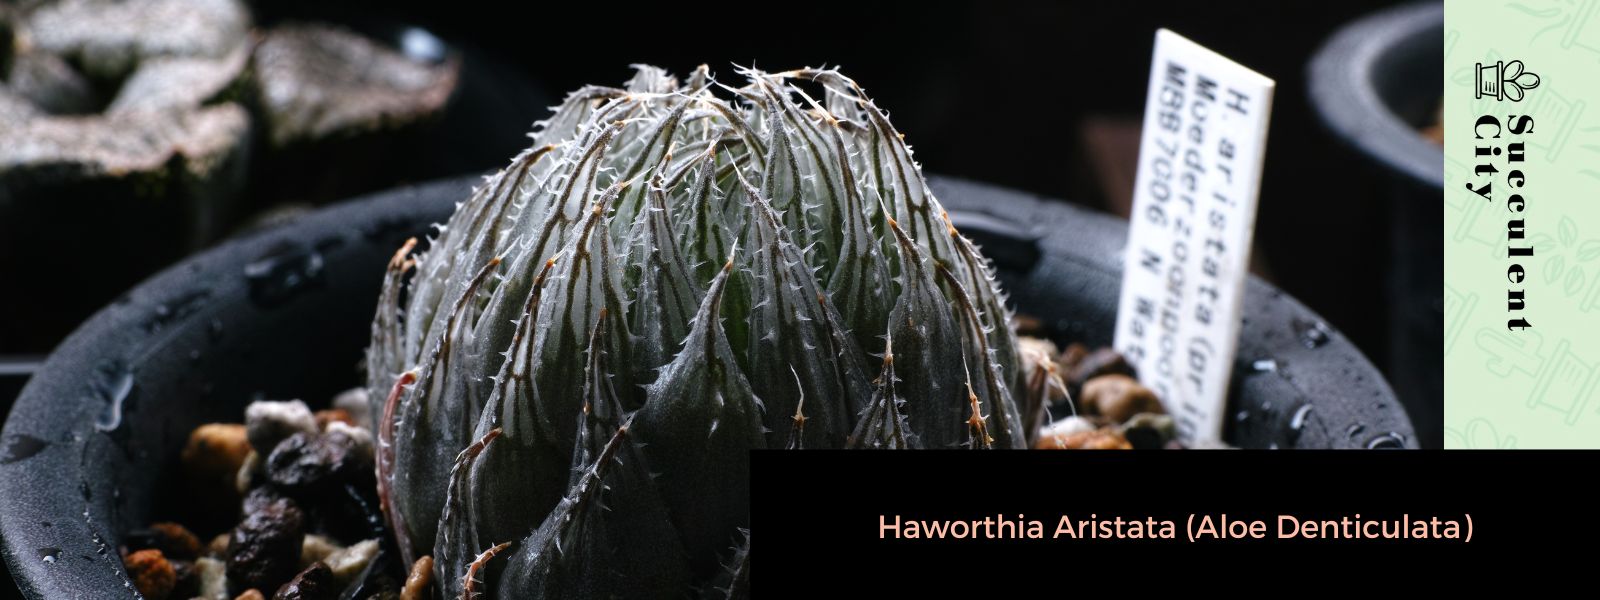 Haworthia Aristata (Aloe Denticulata)